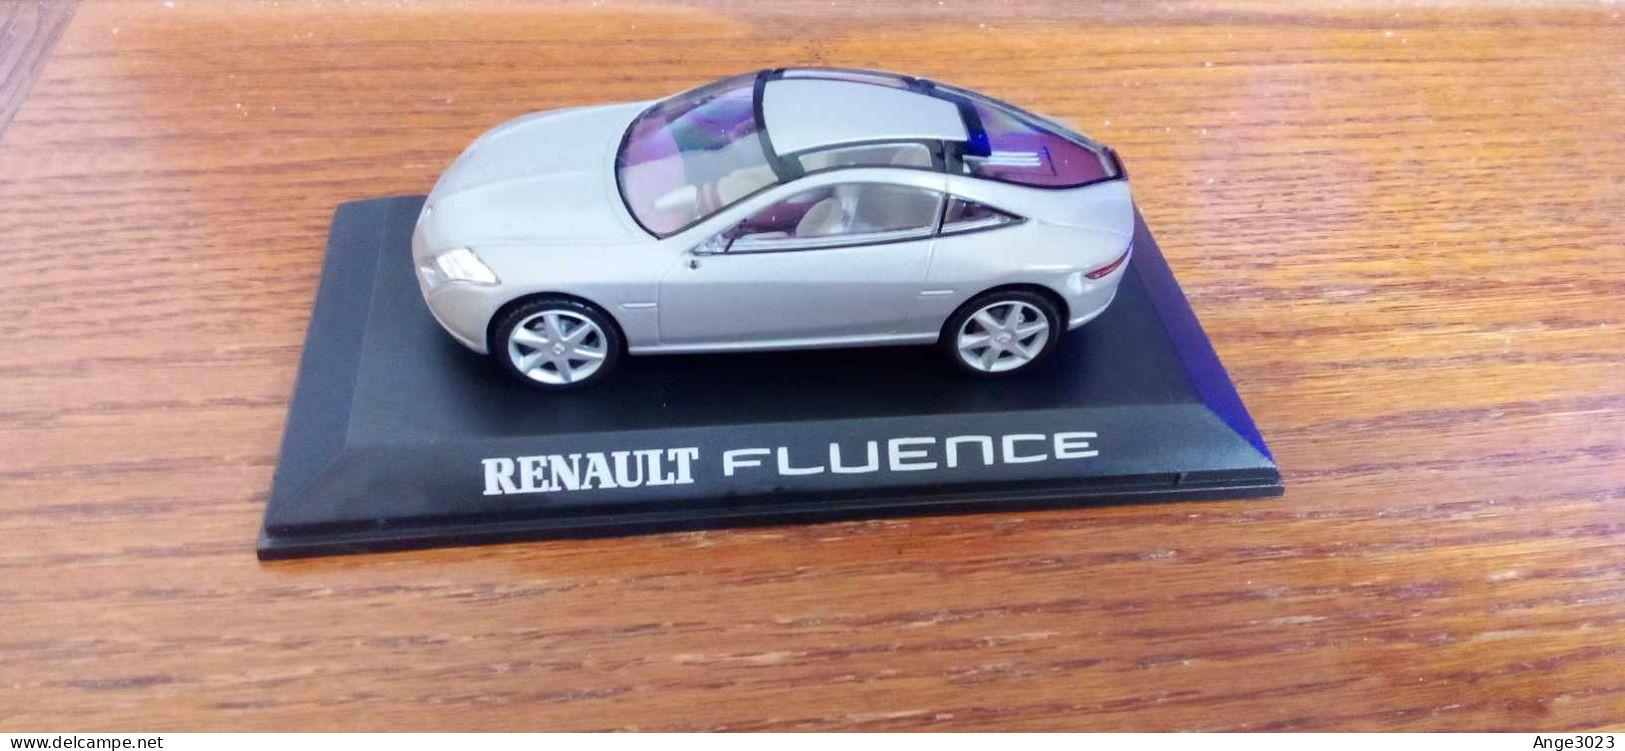 CONCEPT CAR RENAULT FLUENCE - Nzg